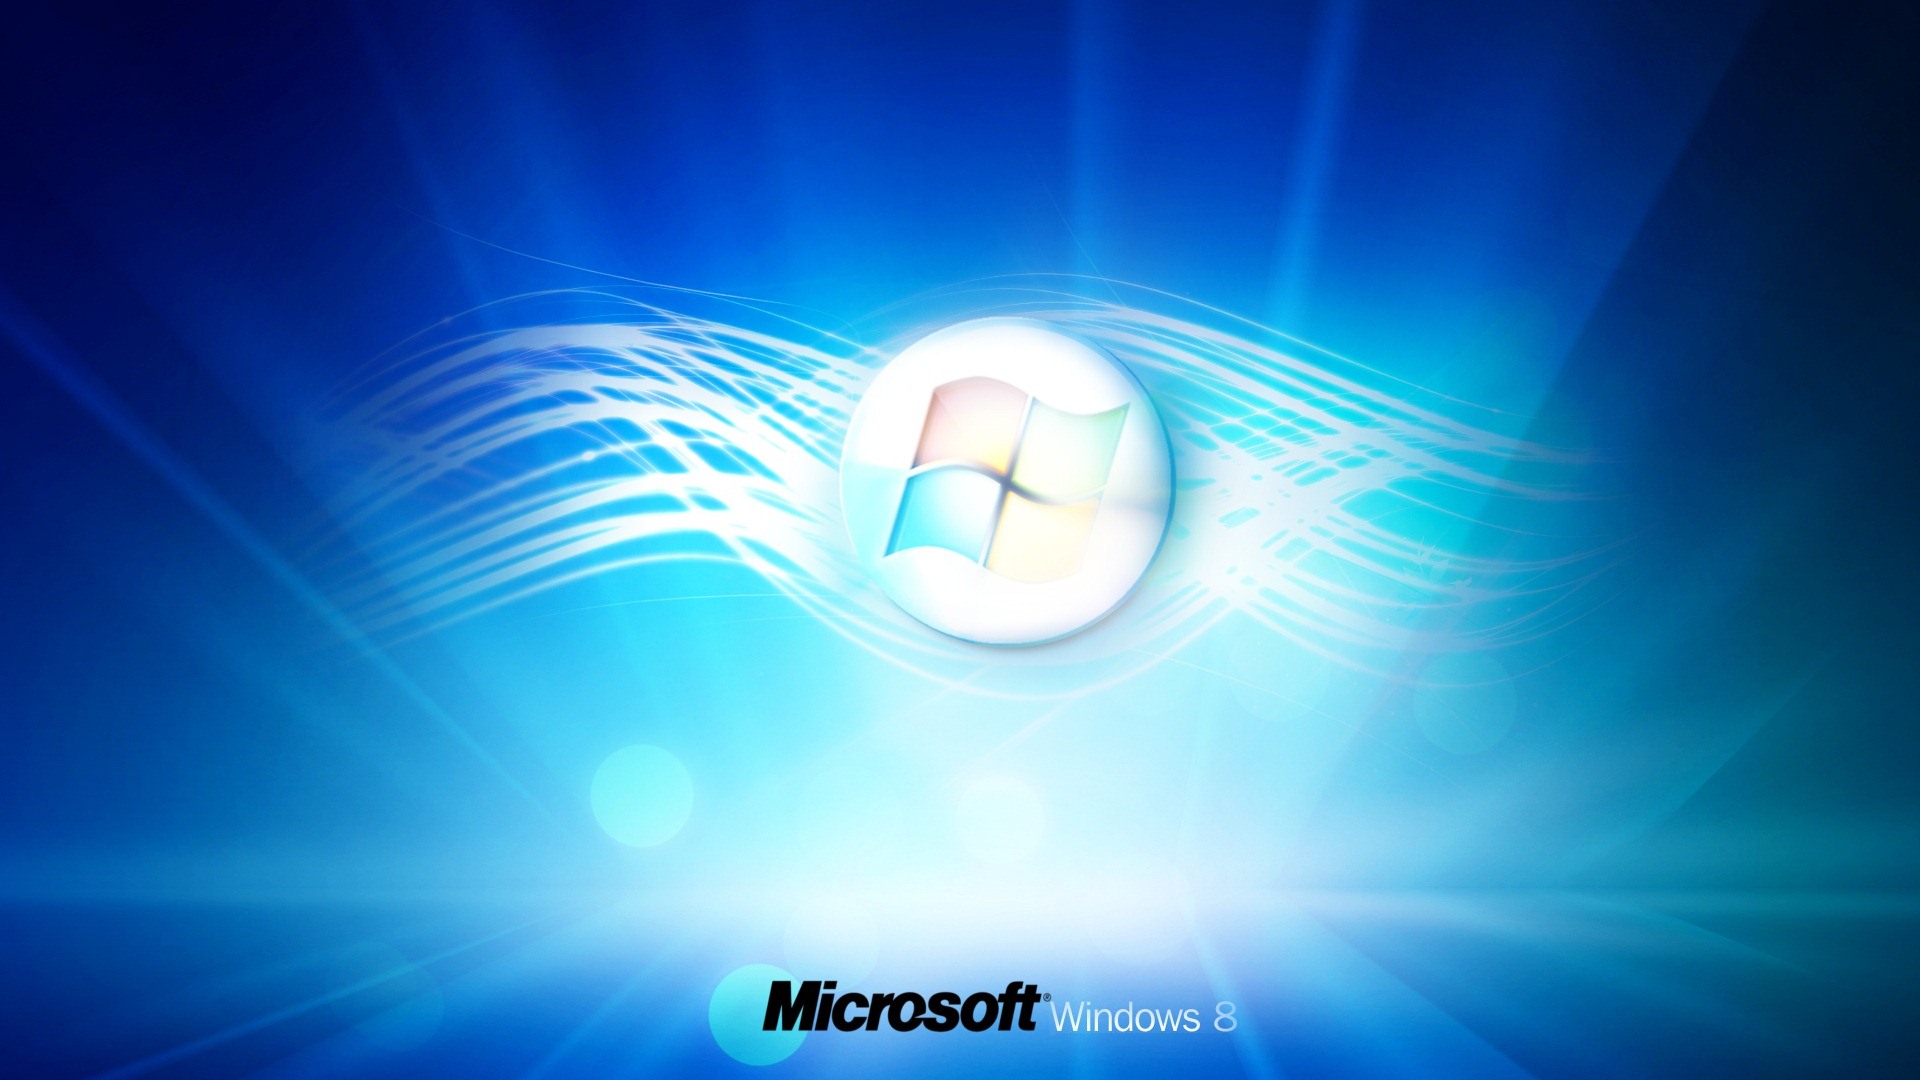 Windows 8 主题壁纸 (一)3 - 1920x1080